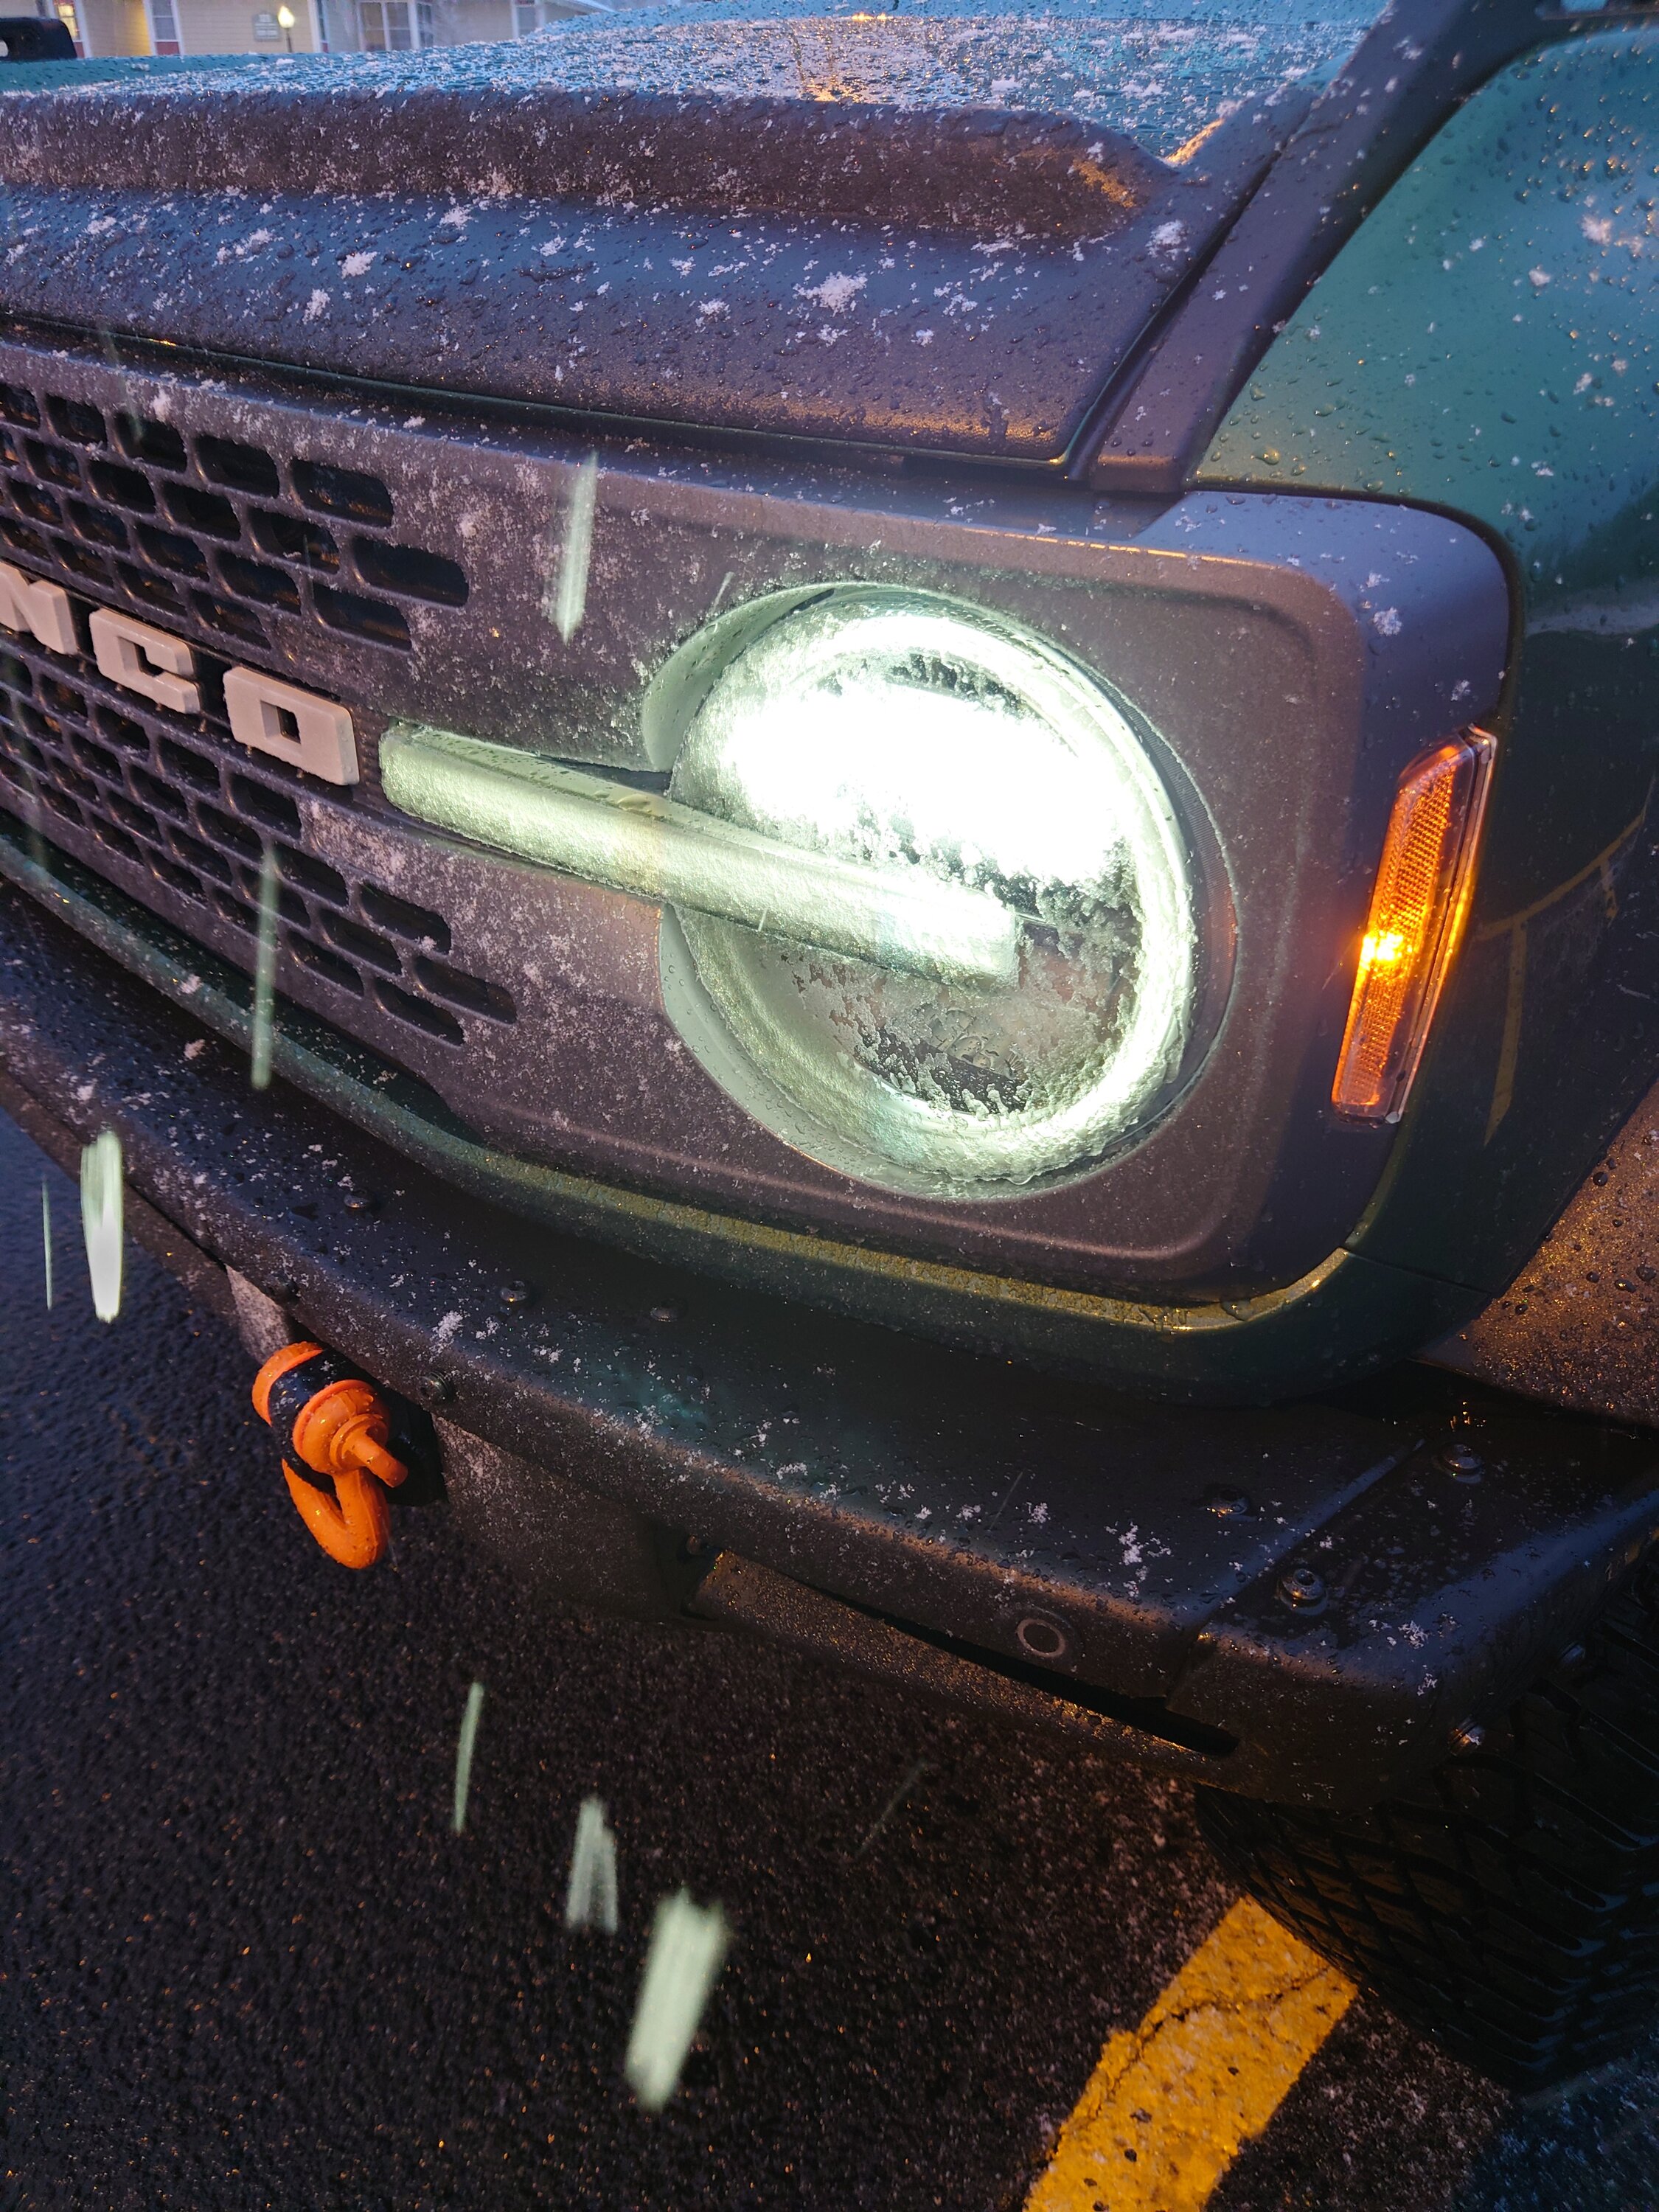 Ford Bronco Windshield, Headlight and Sensor Ice 20230122_171427 - Copy.JPG